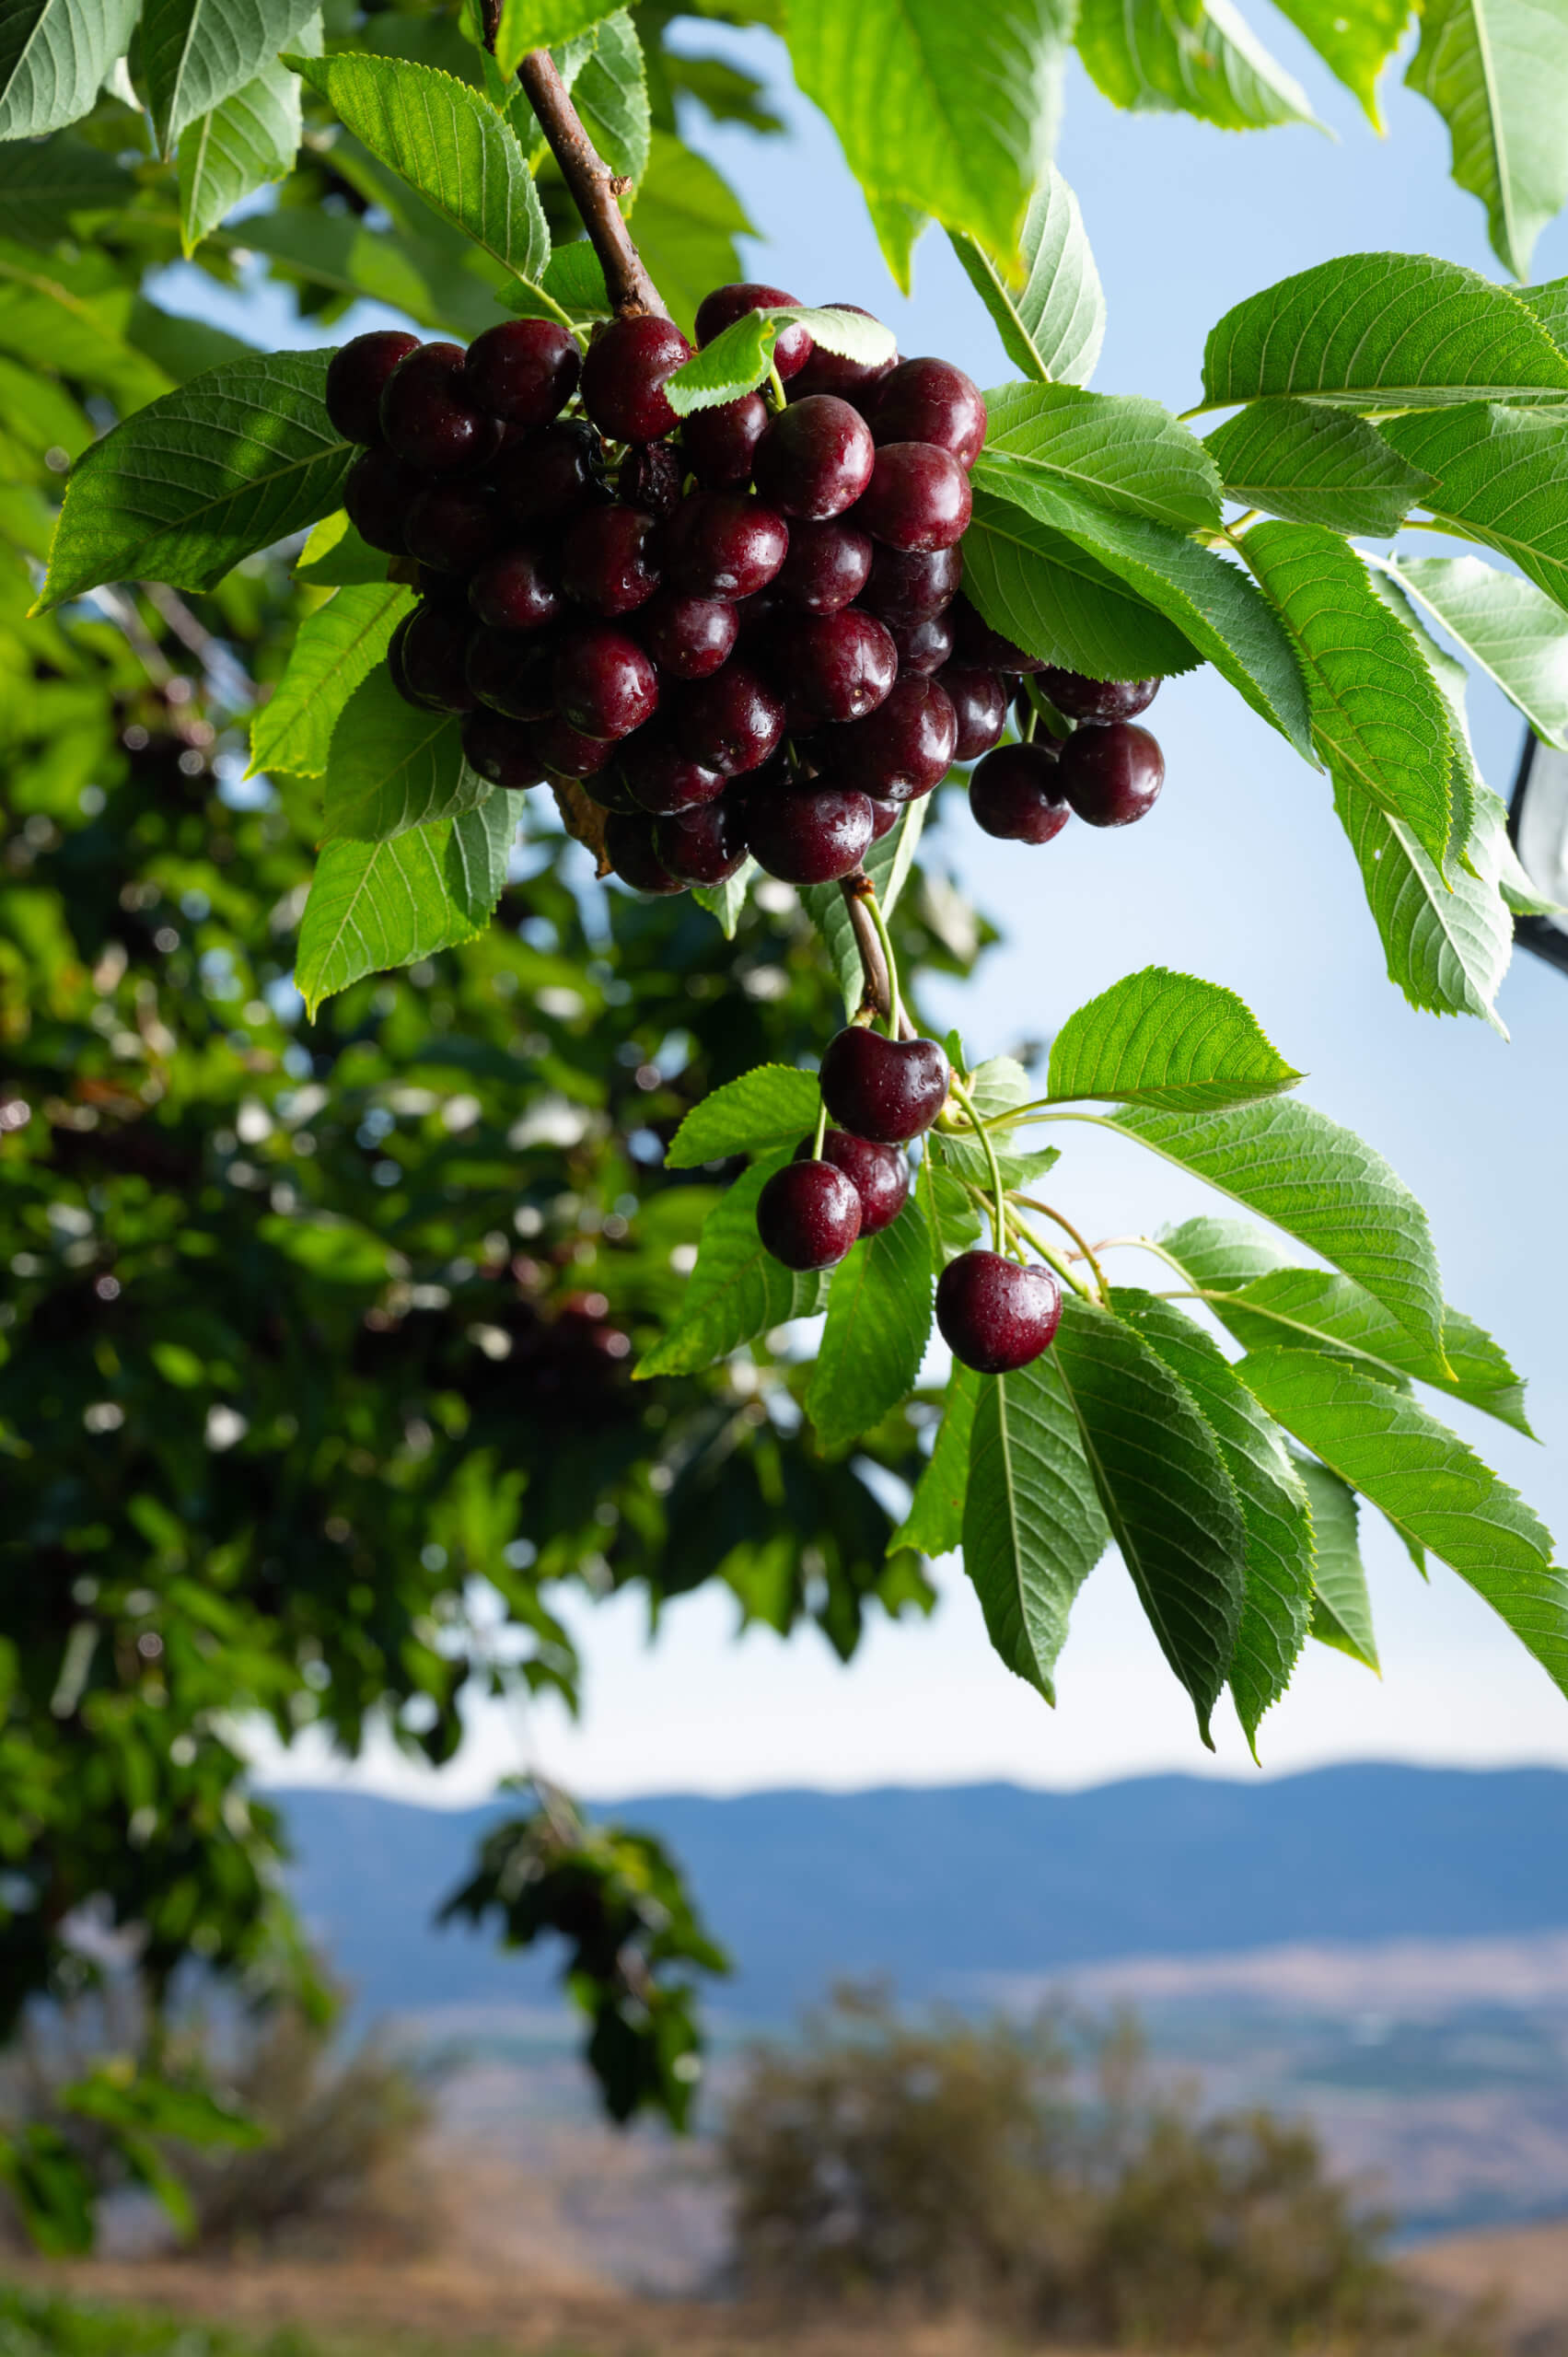 Cherries on the tree during Washington cherry season